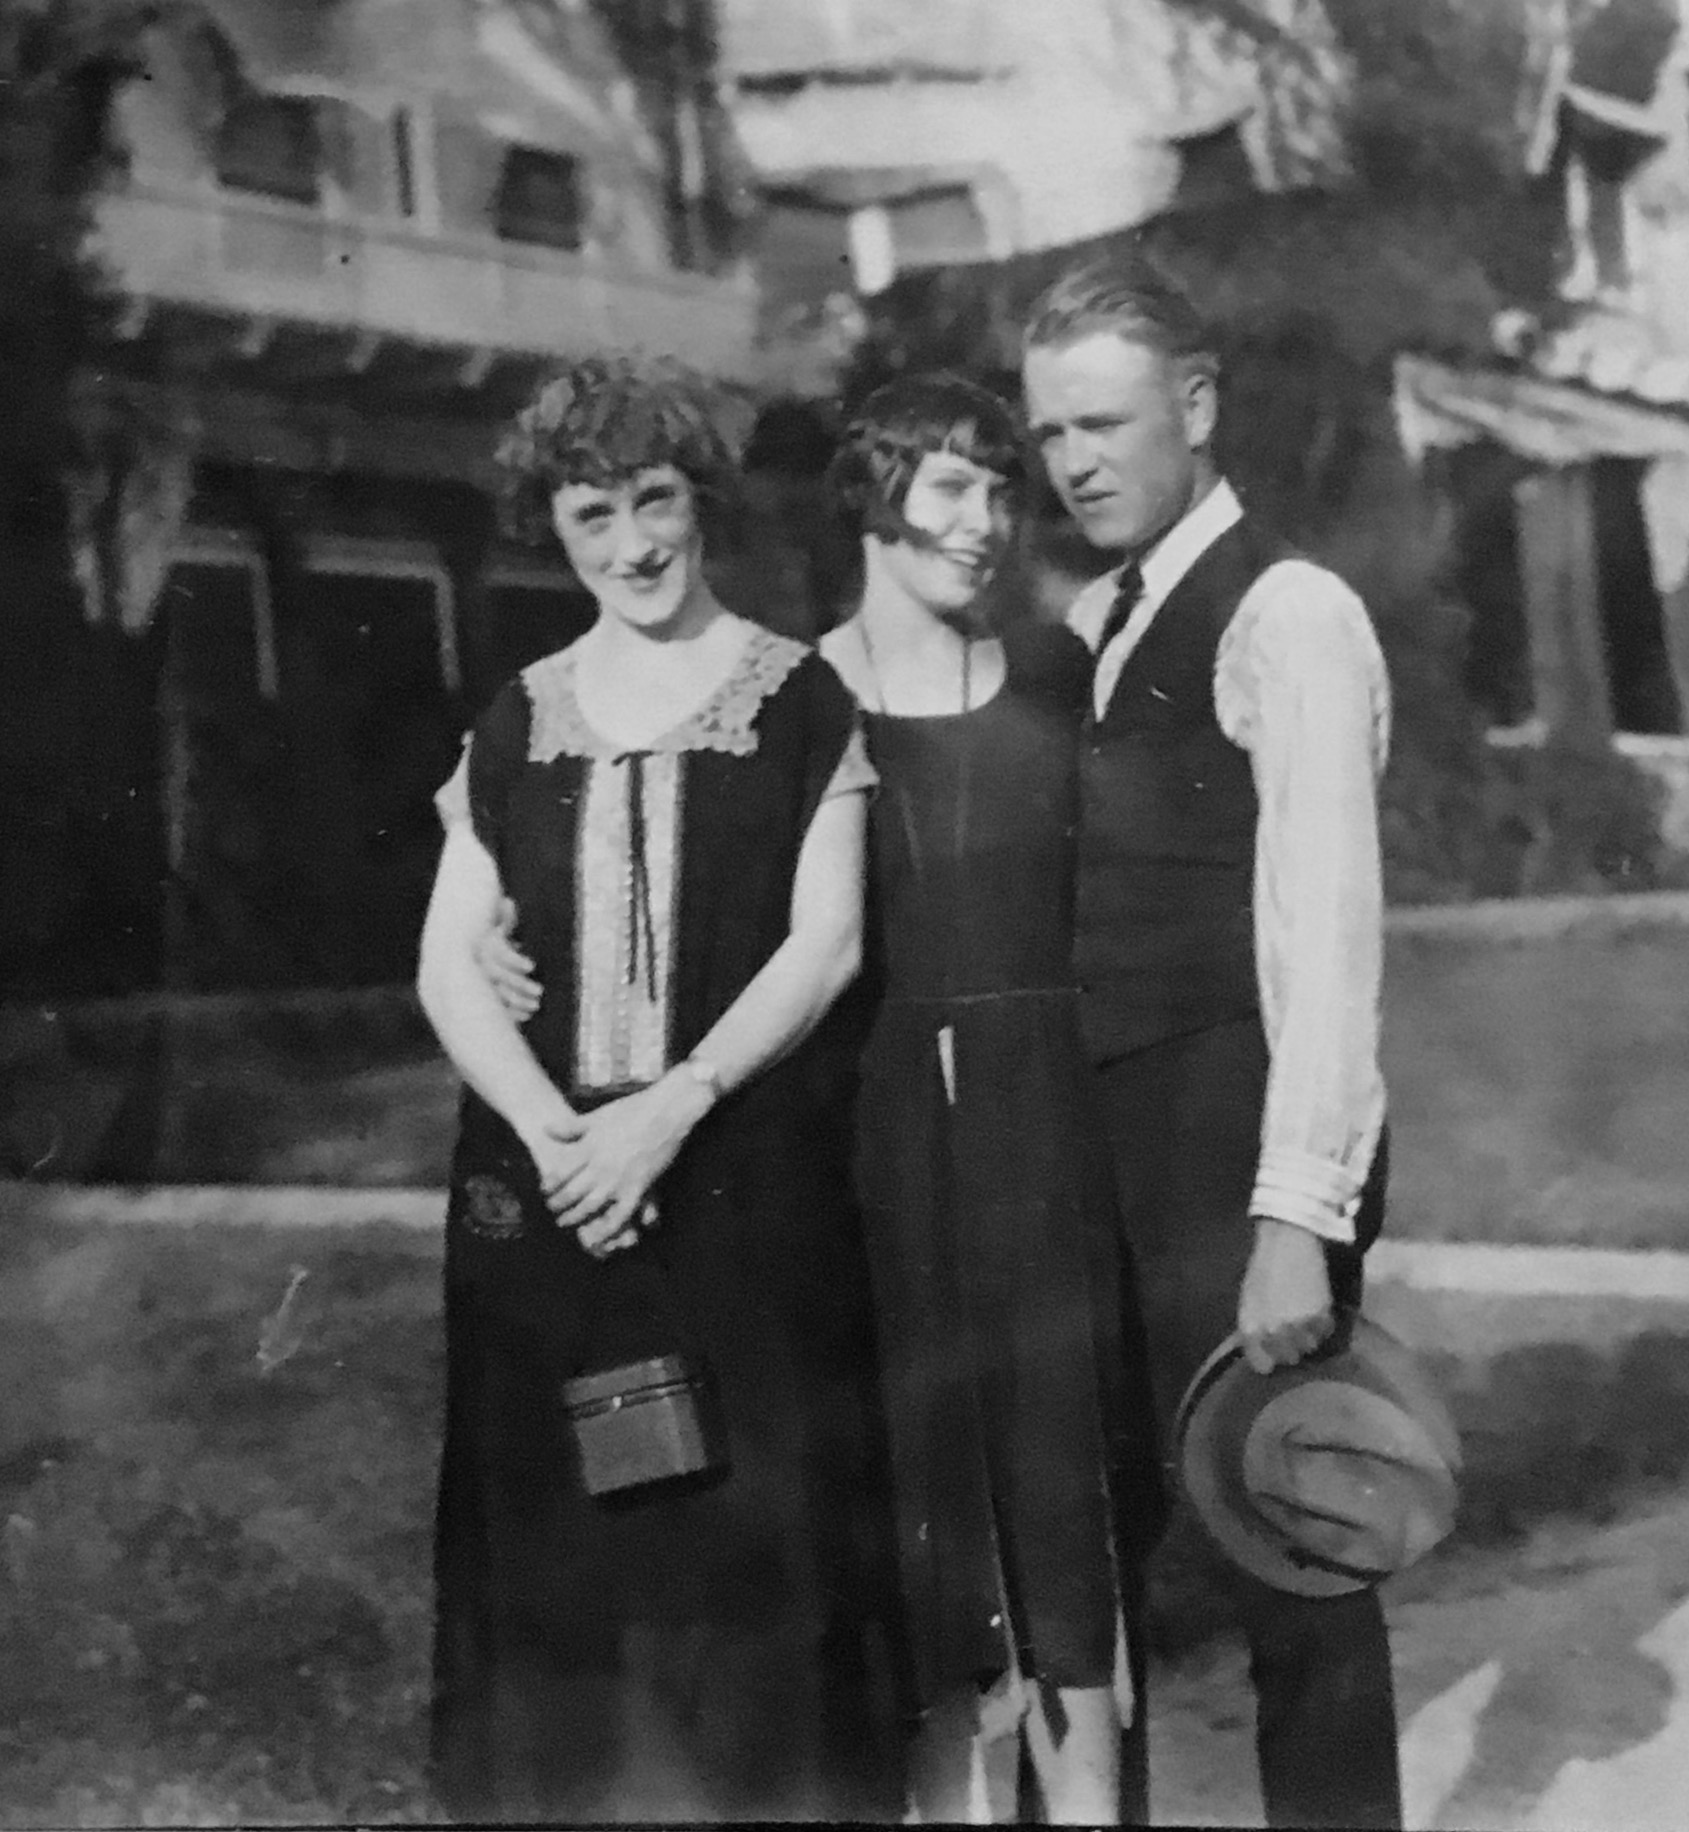 Midge Iveson, Lillian & Geo. Raber: 3 of my grandprnts. My mat'l grandfthr, Charles Iveson, took the photo, c. 1925, San Bernardino, CA